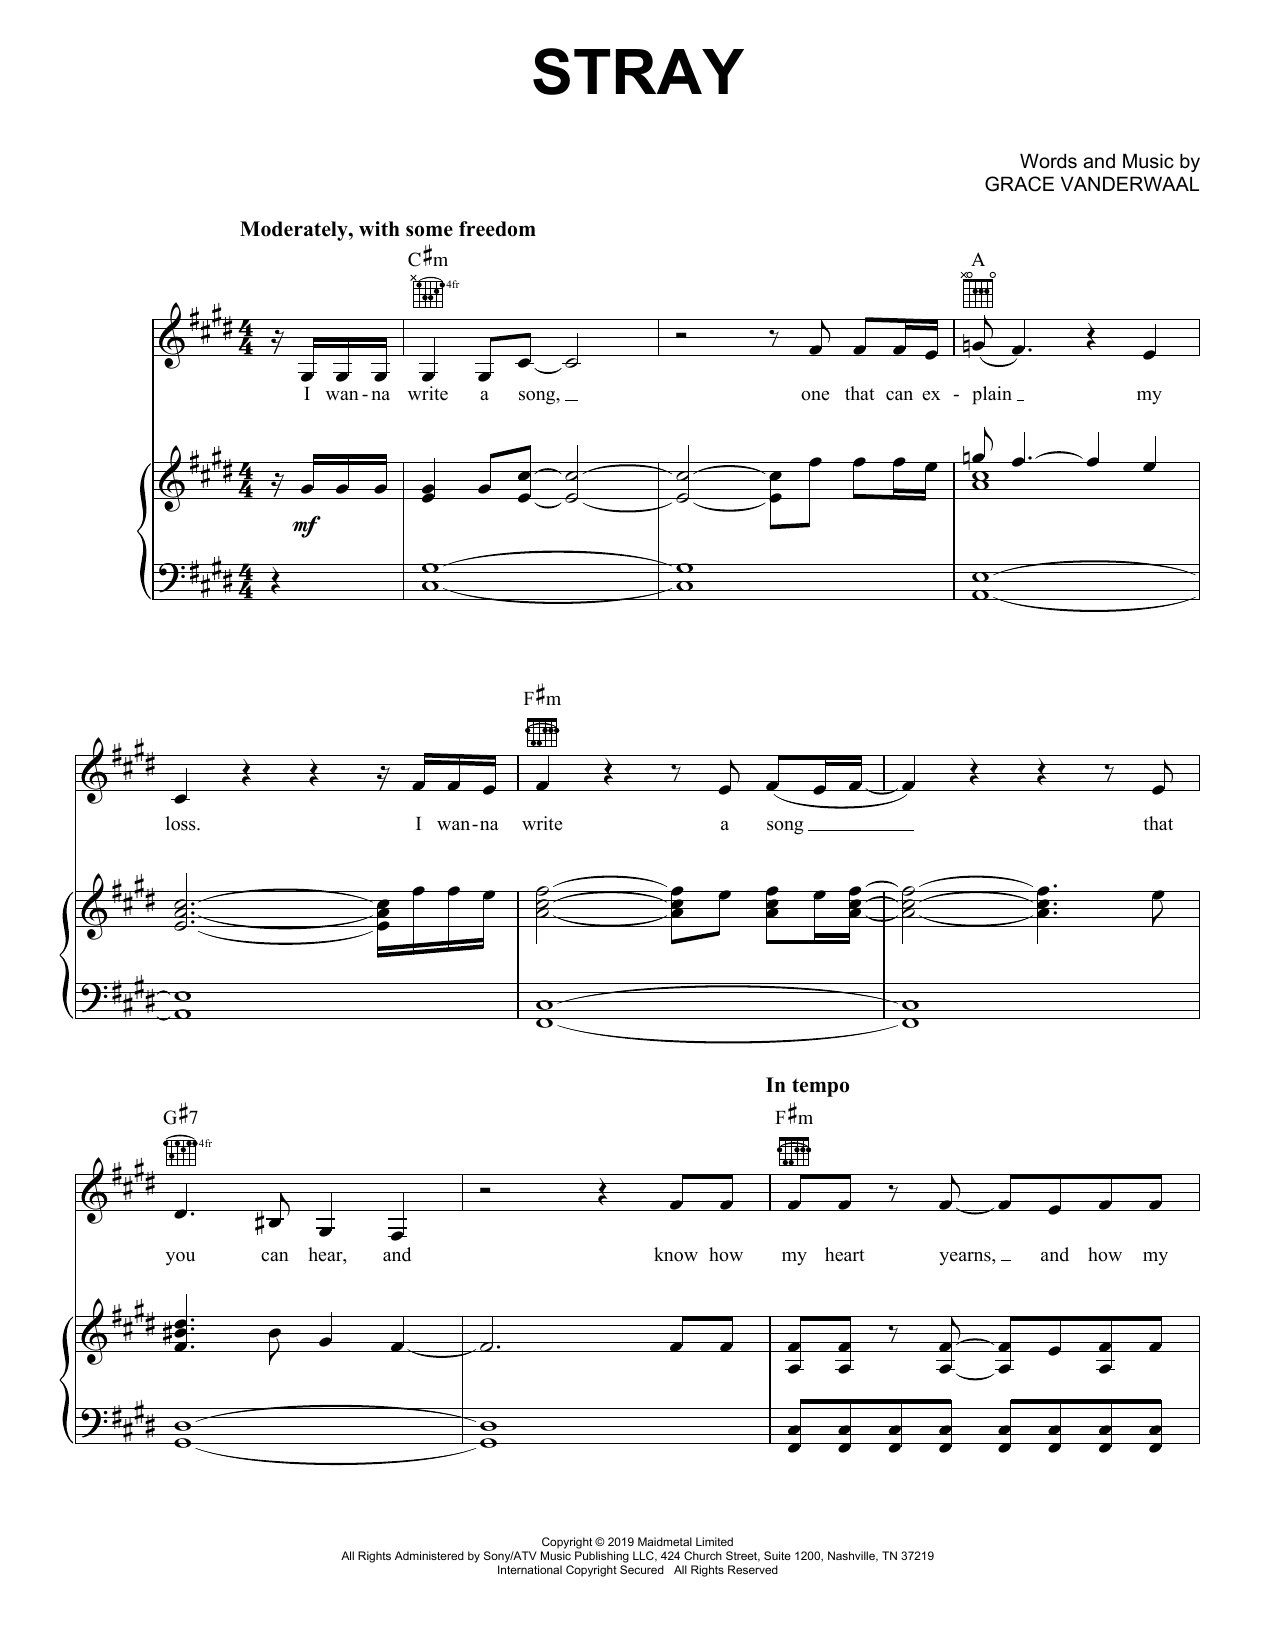 Grace VanderWaal Stray Sheet Music Notes & Chords for Ukulele Chords/Lyrics - Download or Print PDF